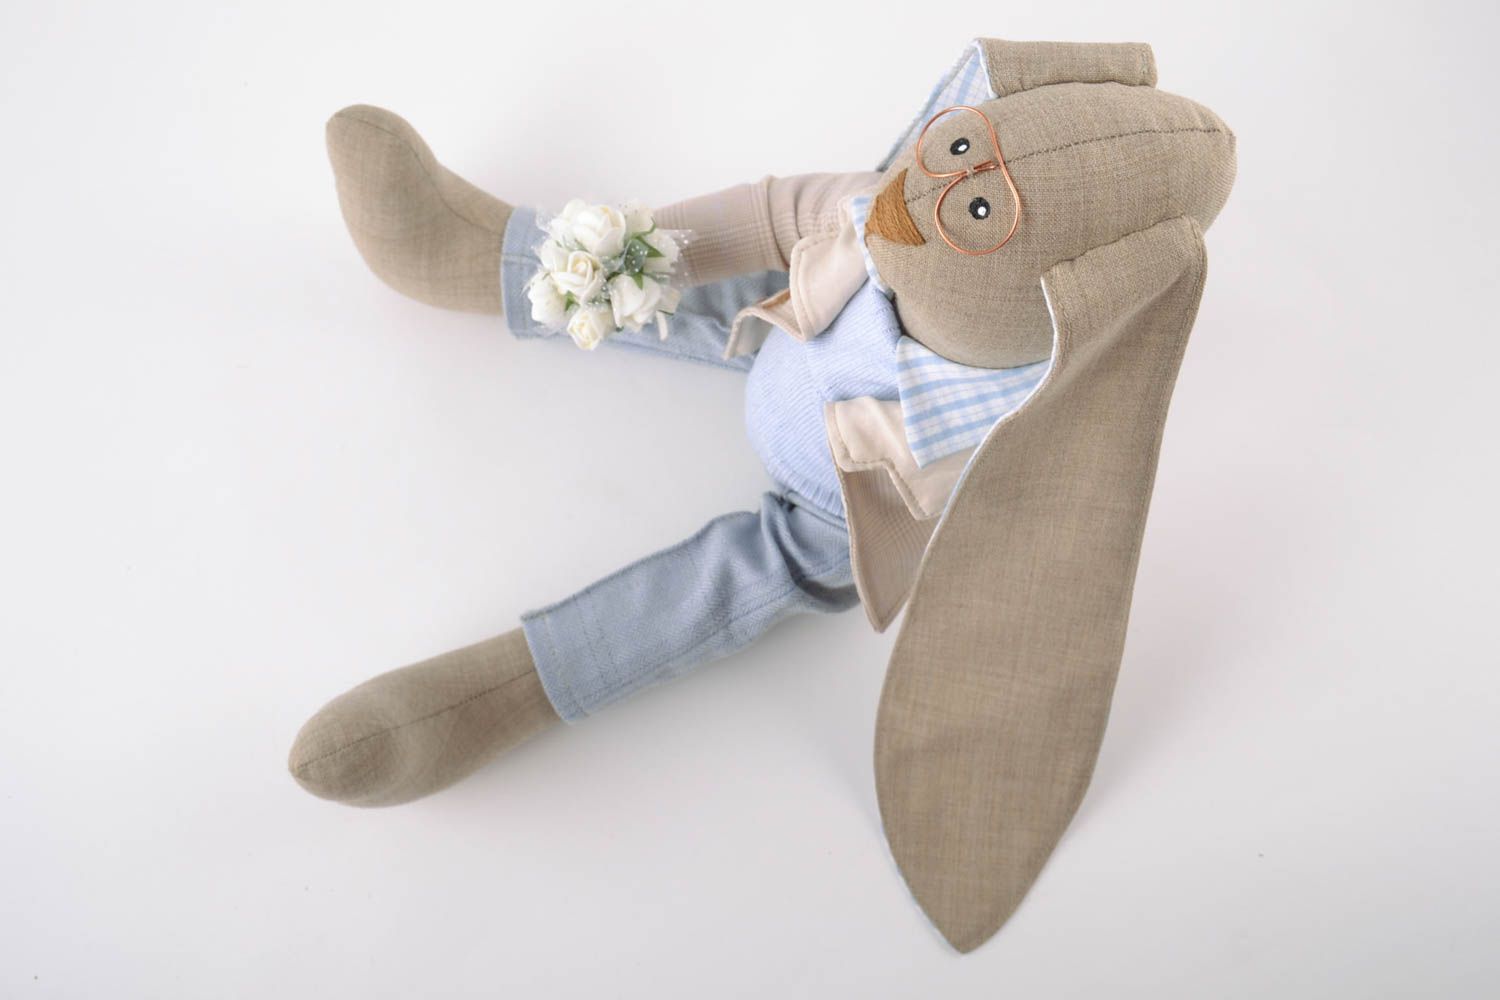 Handmade linen fabric soft toy rabbit gentleman in suit with flower bouquet photo 4